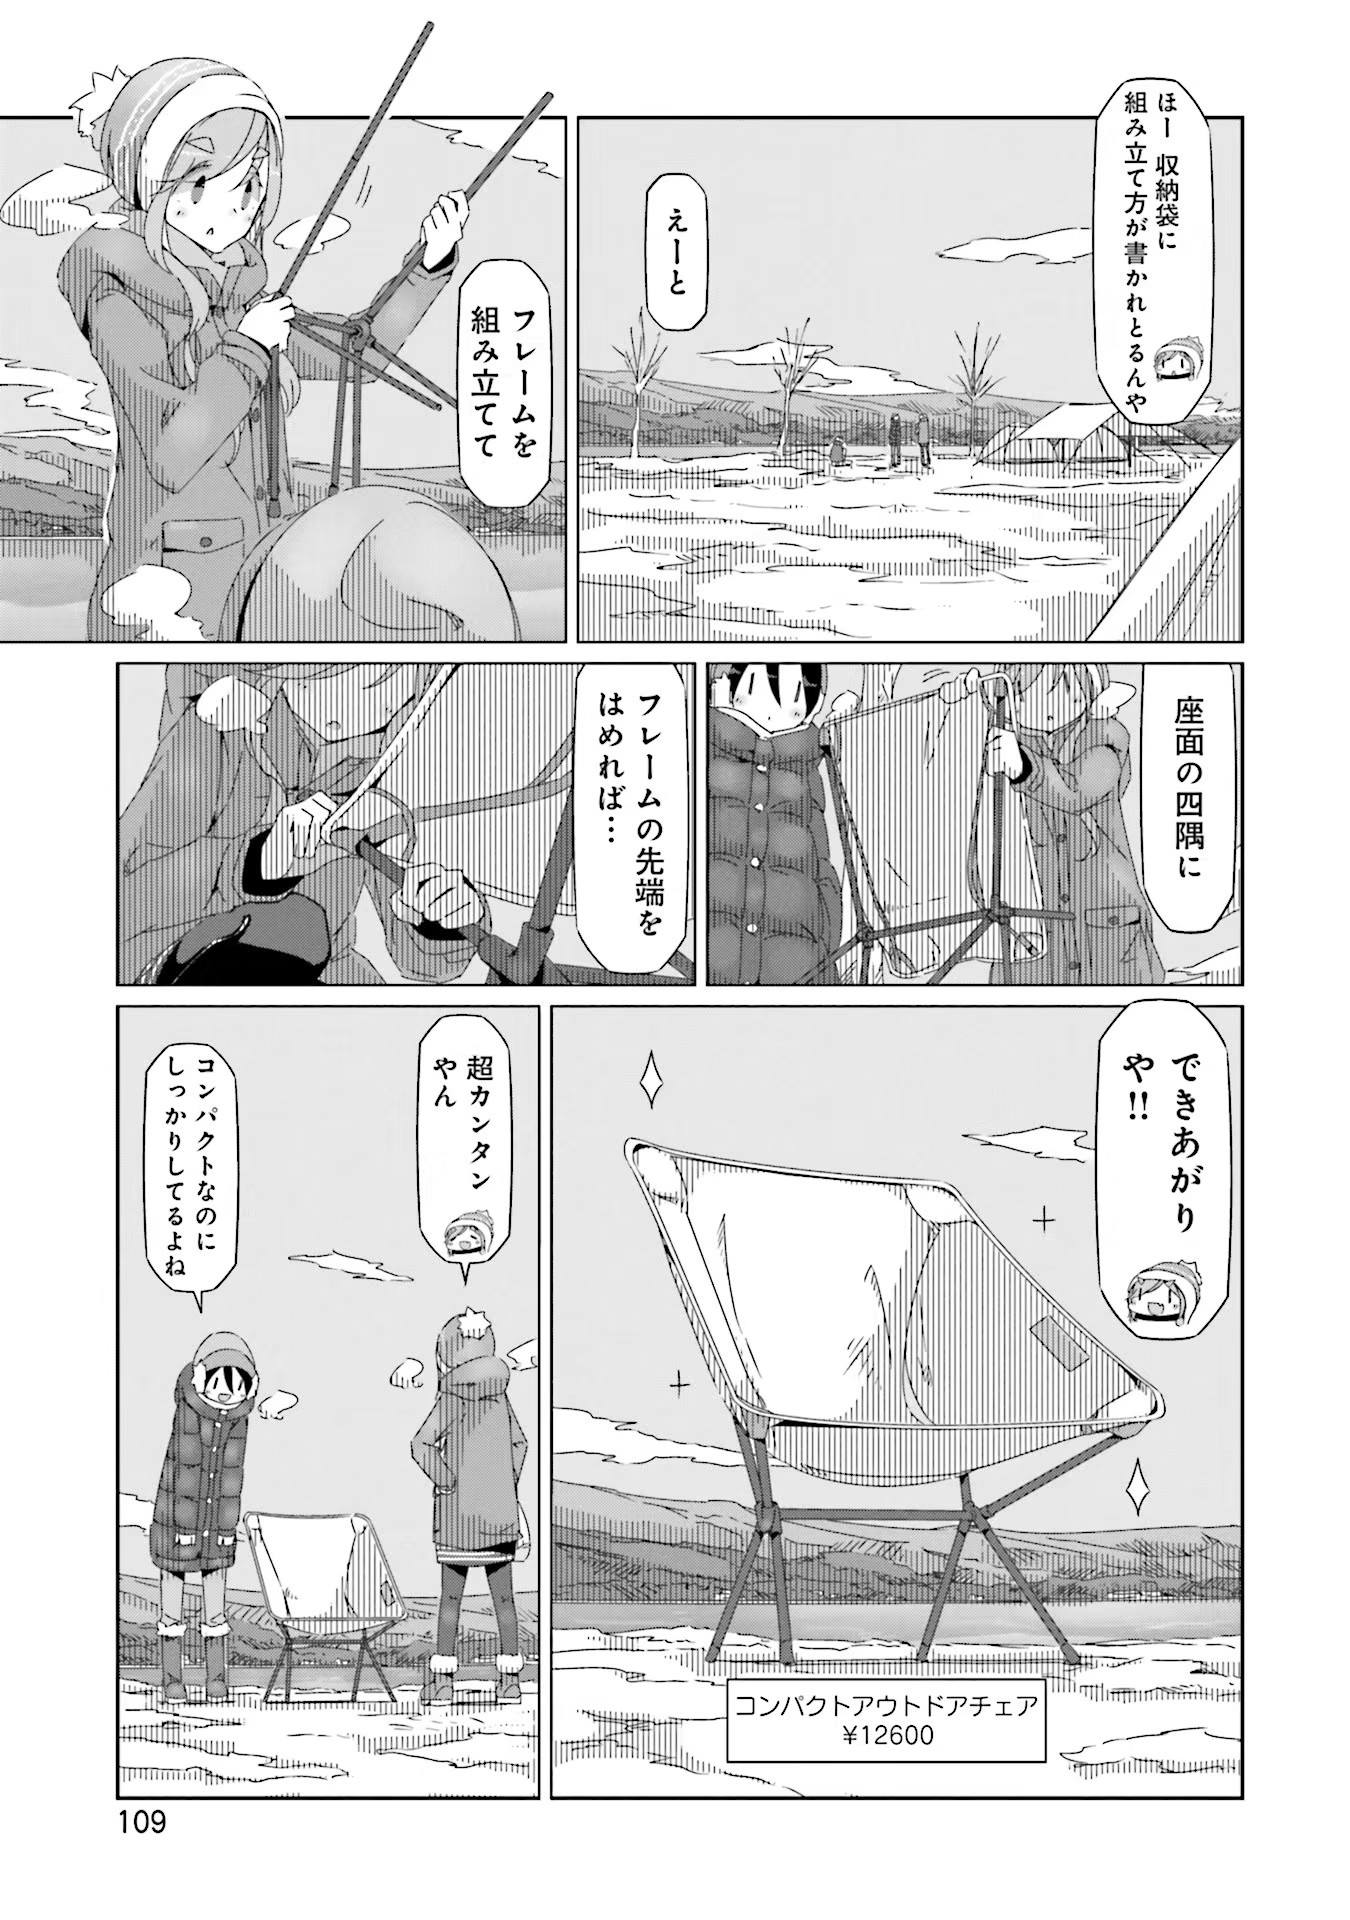 Yuru Camp - Chapter 33 - Page 4